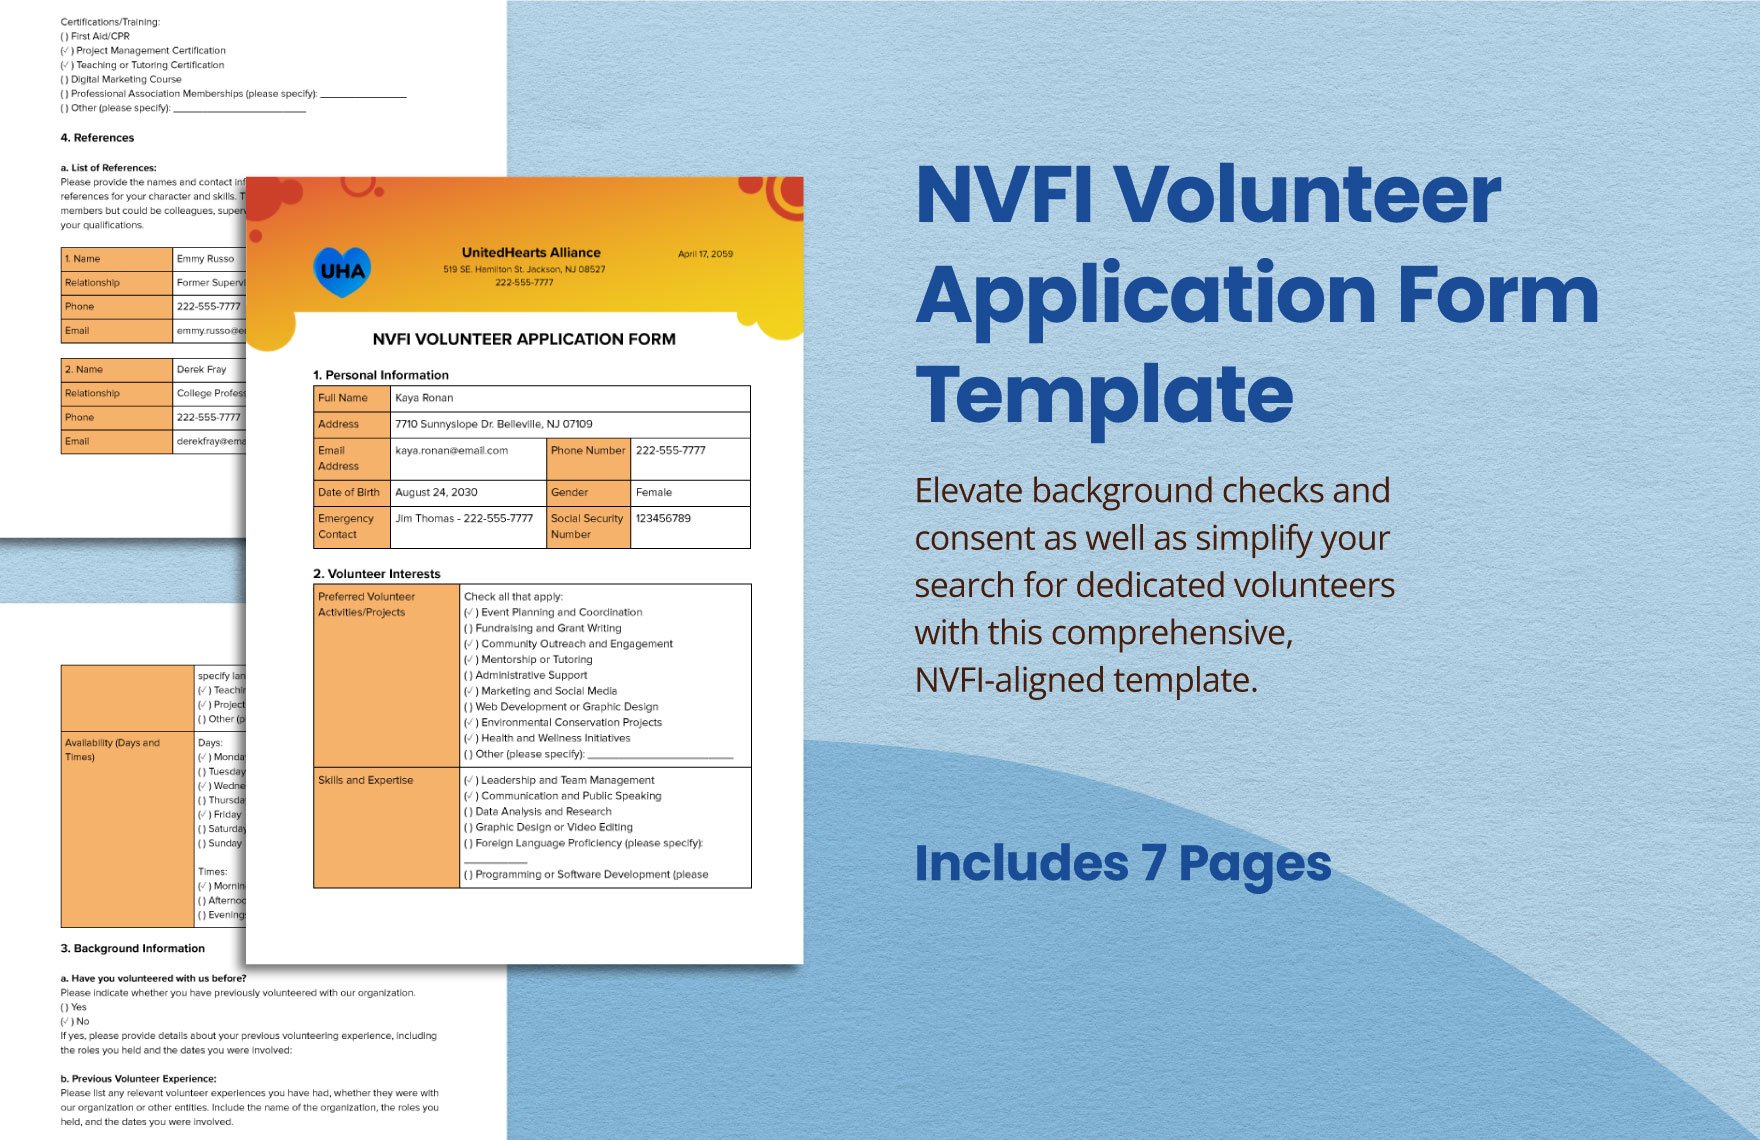 NVFI Volunteer Application Form Template